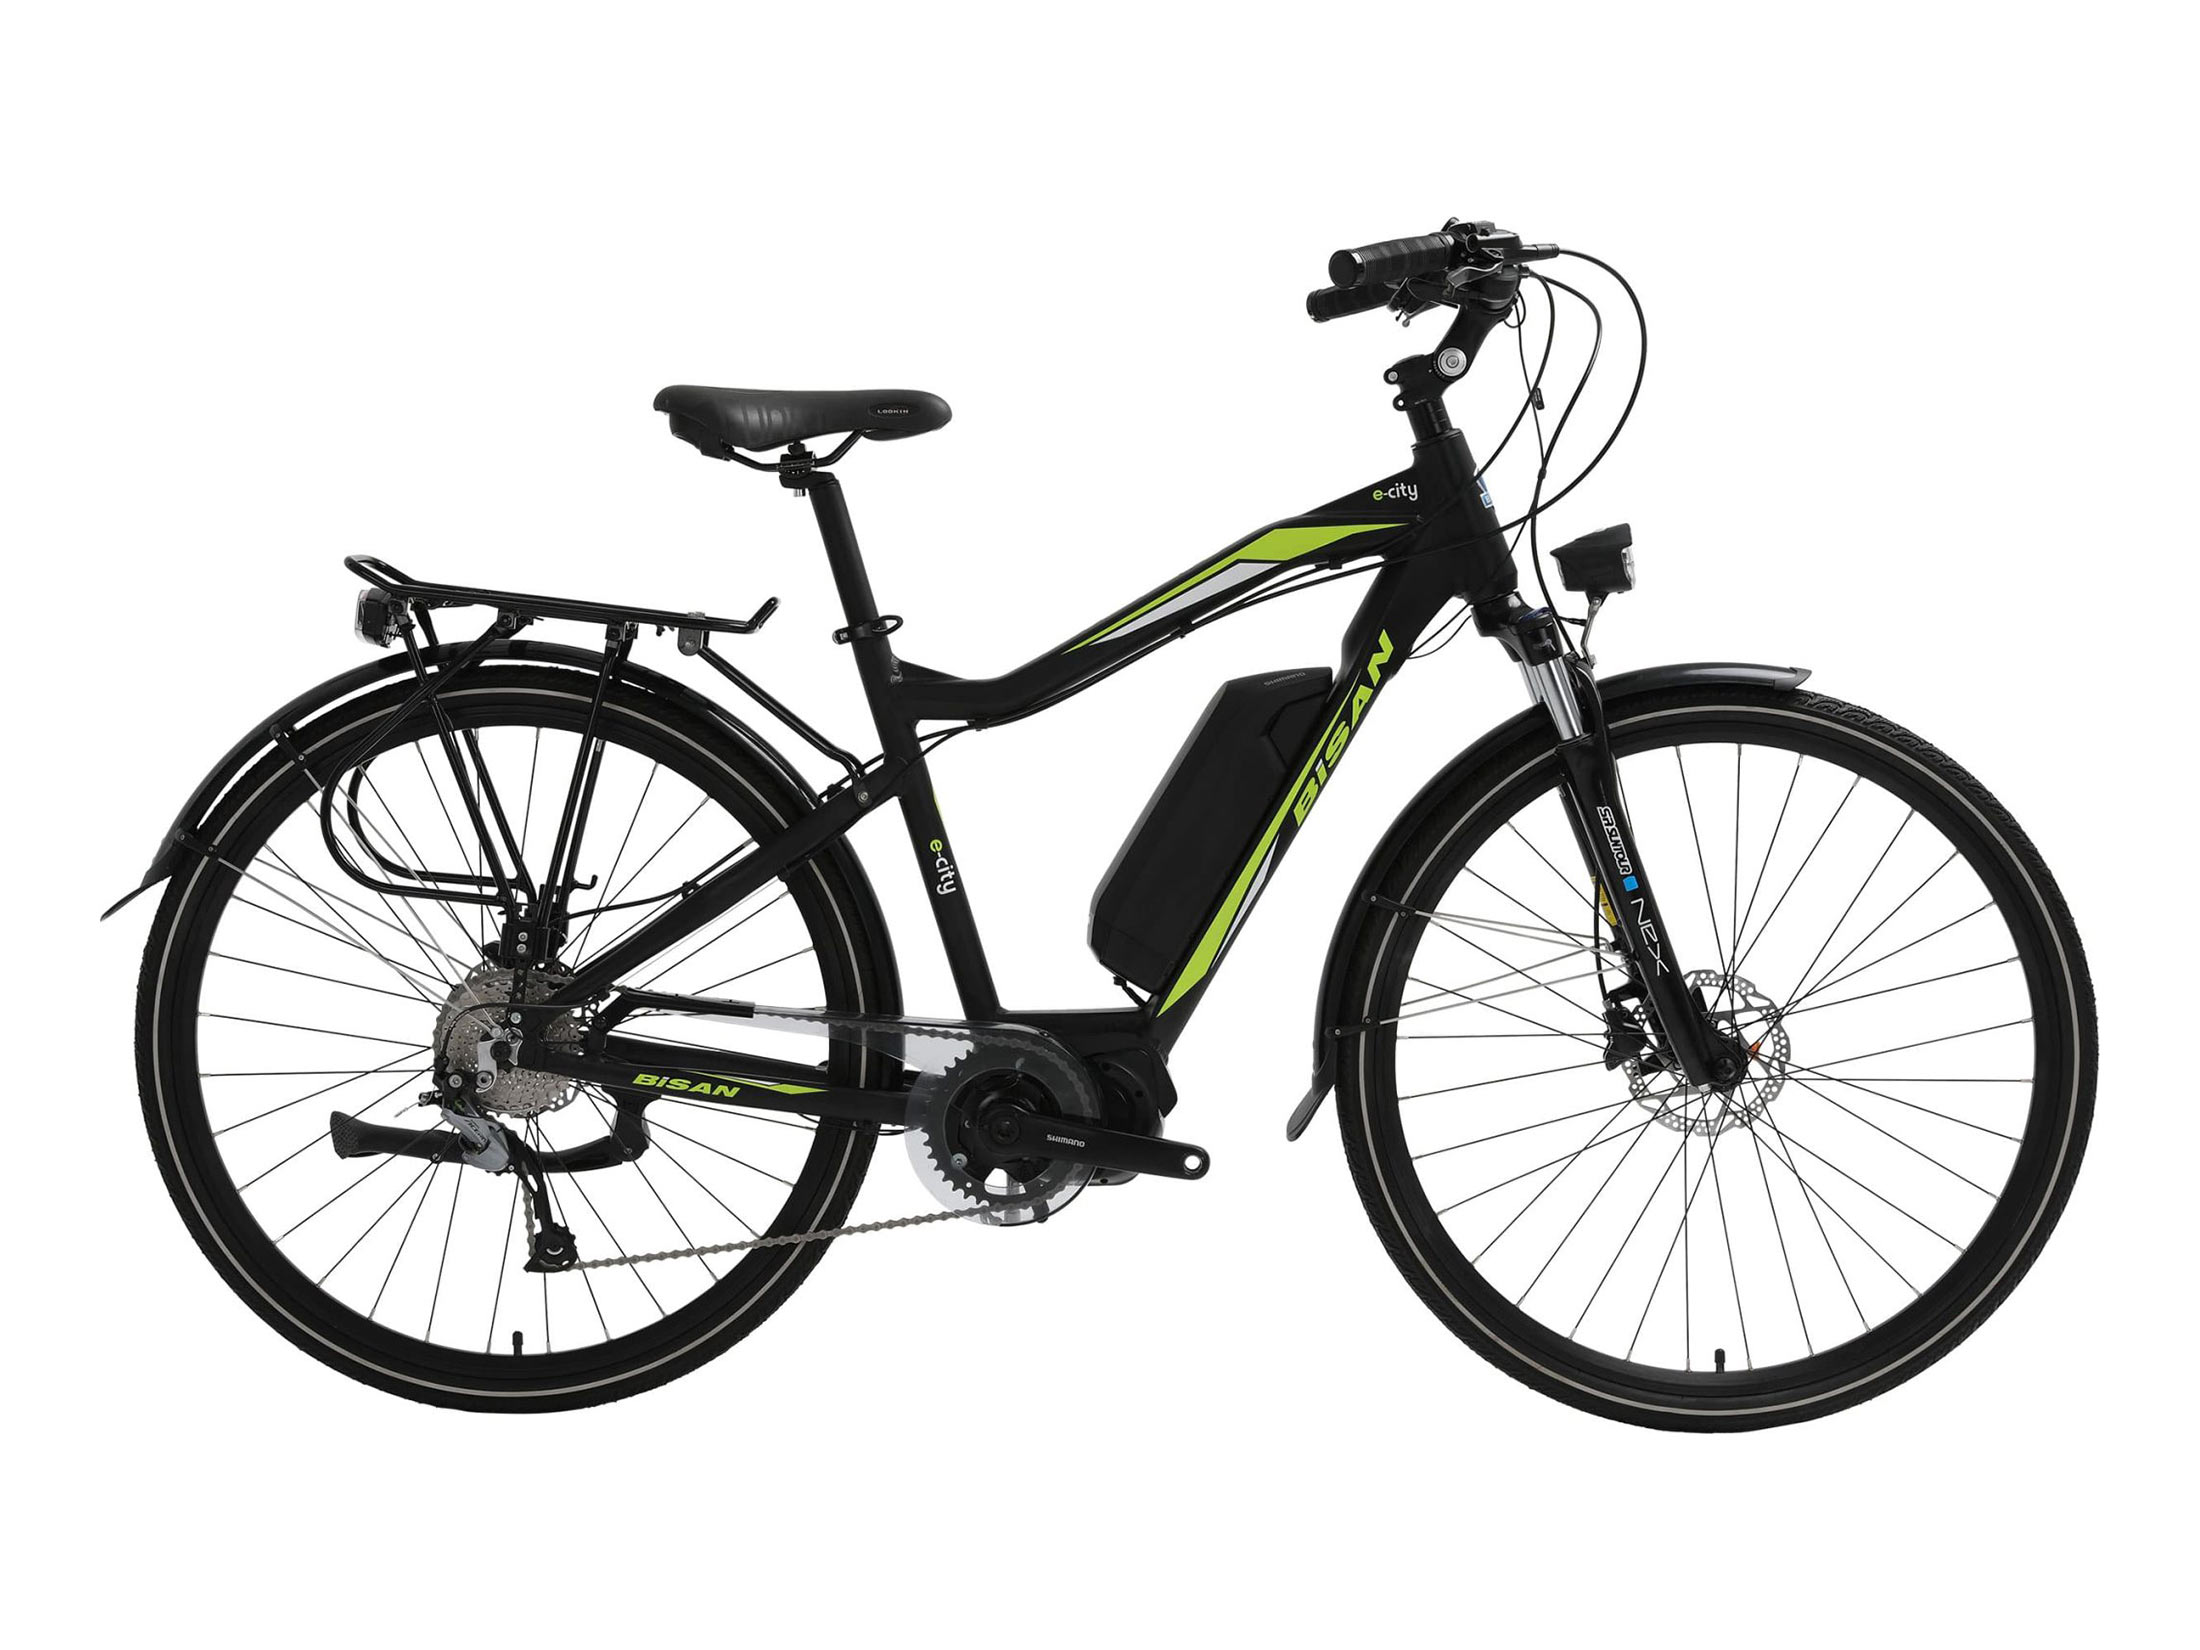 Bisan e-City 700c e-Bike - Black / Green (49cm)